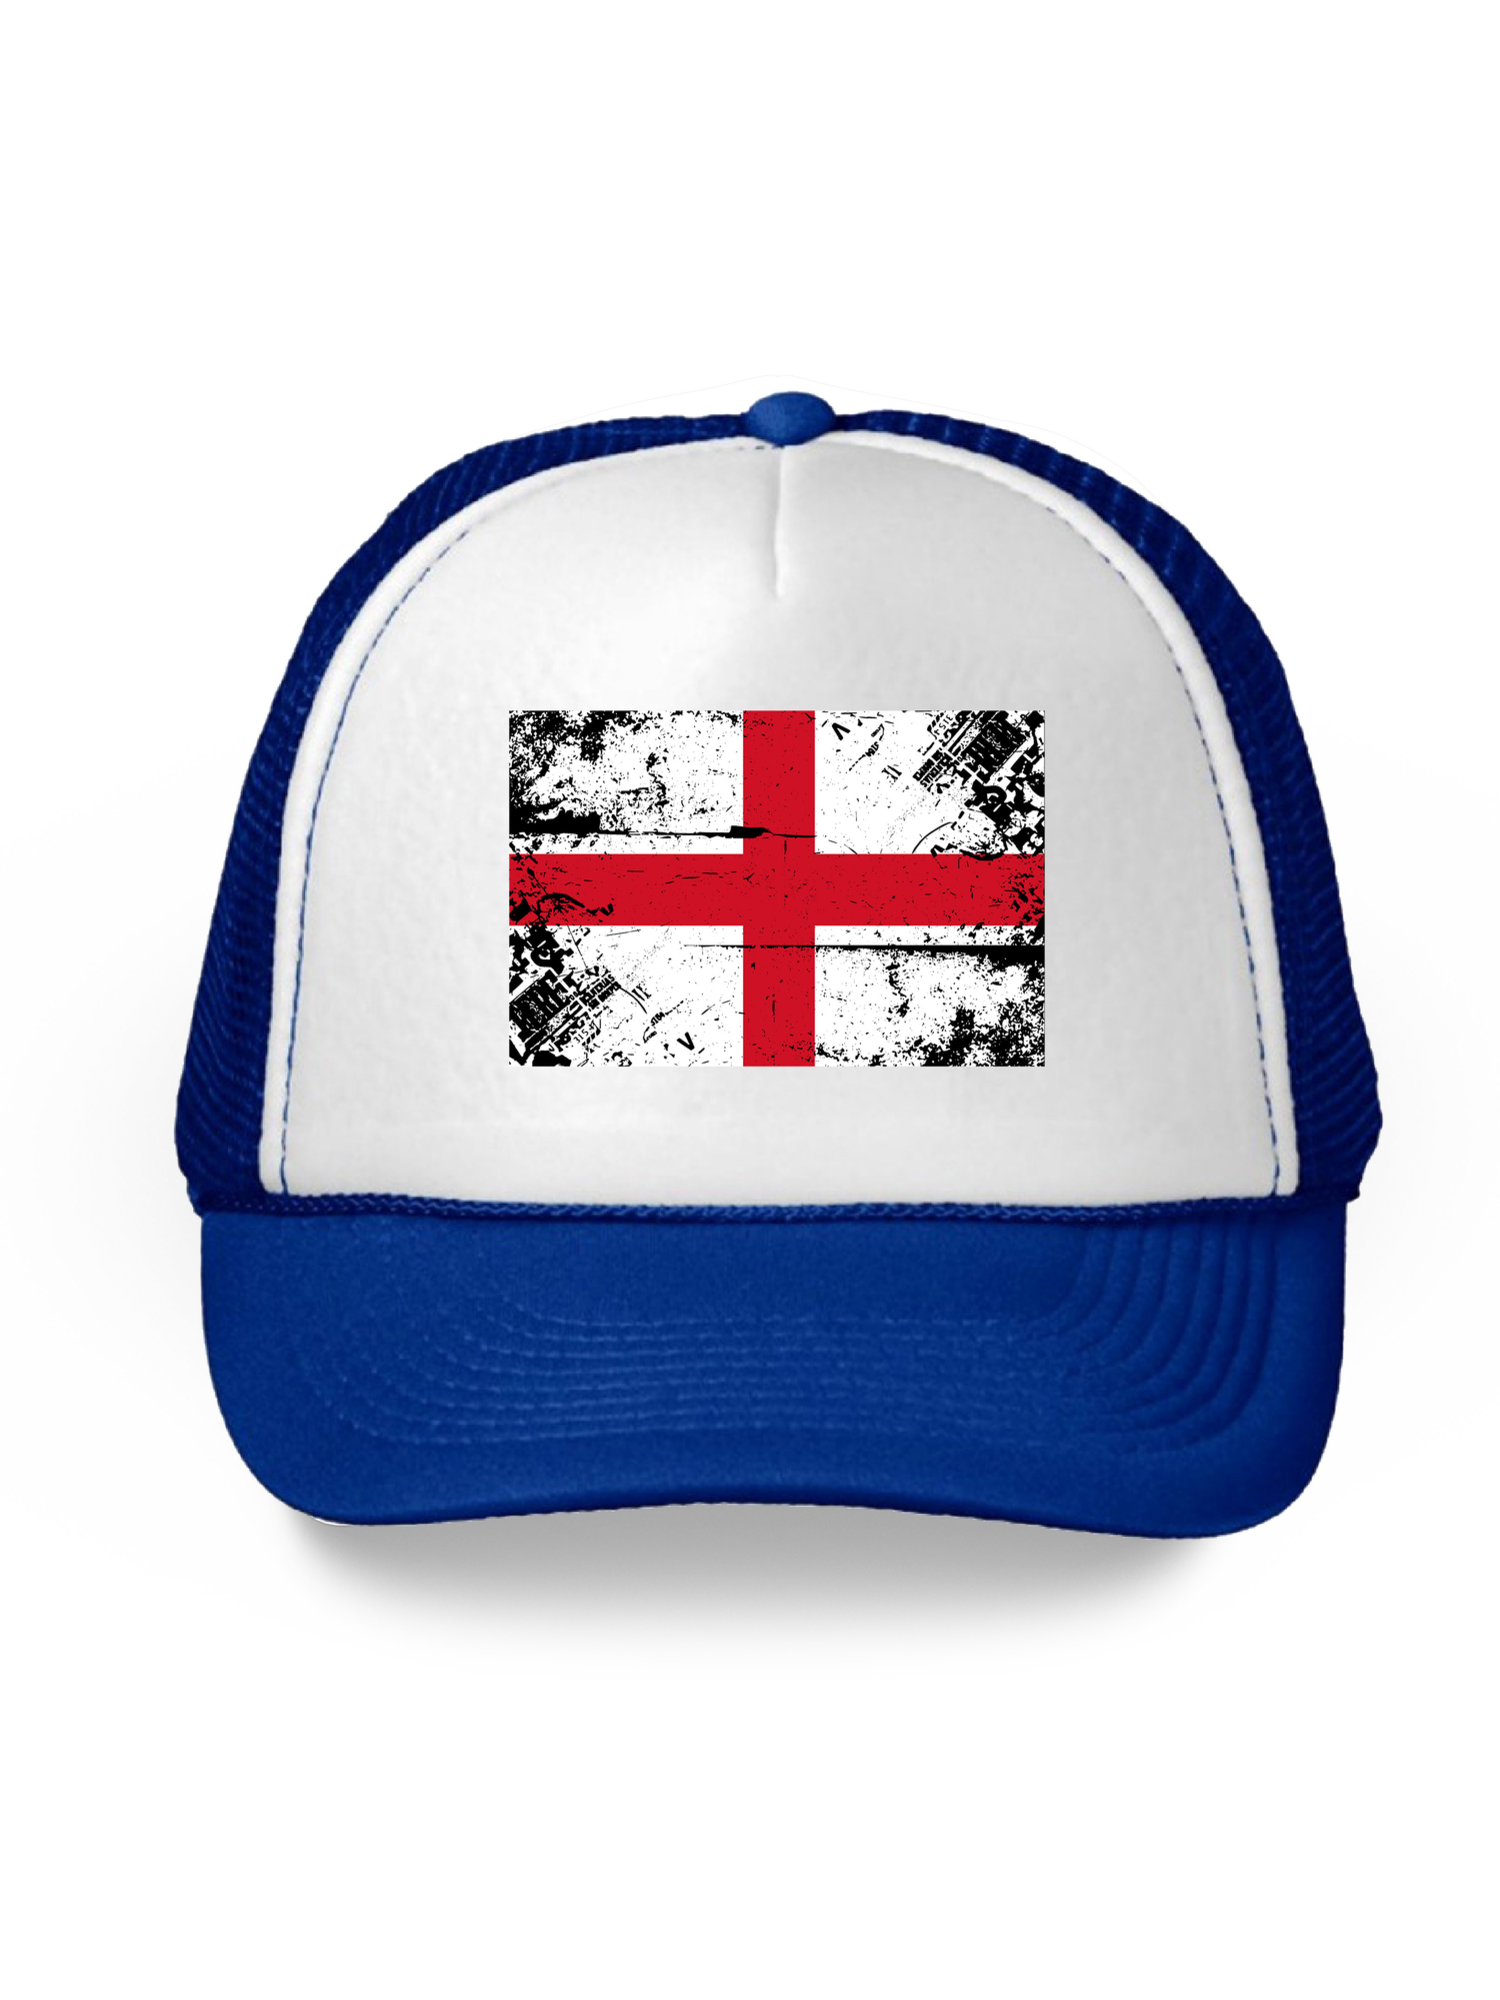 Awkward Styles England Flag Hat English Trucker Hat England Baseball Cap Amazing Gifts from England English Soccer 2018 Hat England 2018 Hat for Men and Women English Flag Snapback Hats England Gifts - image 1 of 6